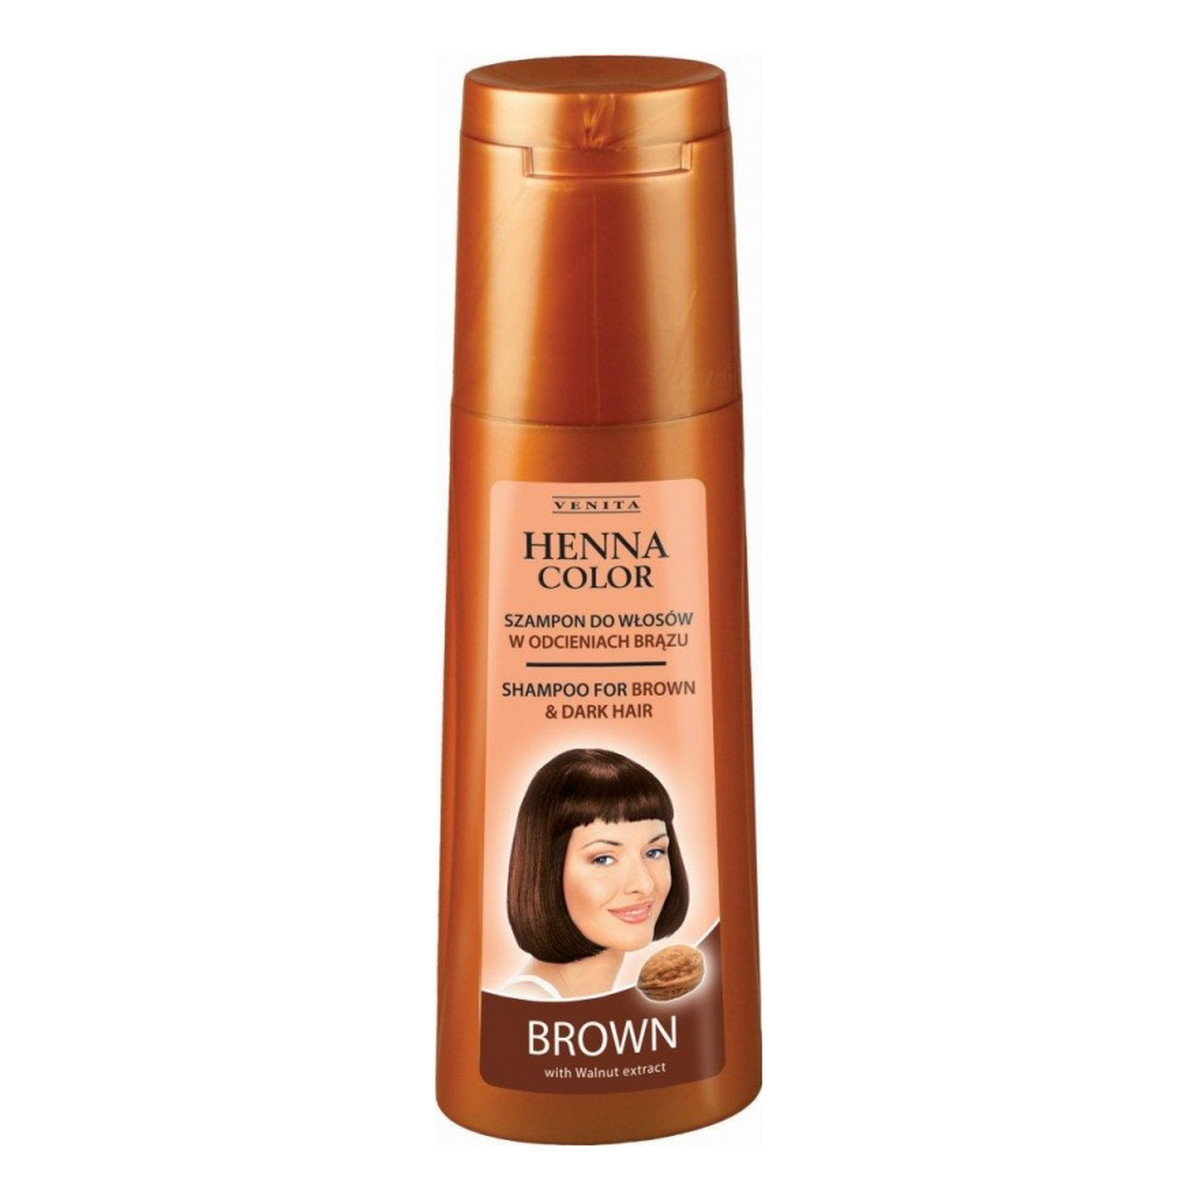 Venita Brown Henna Color Szampon Do Włosów 250ml